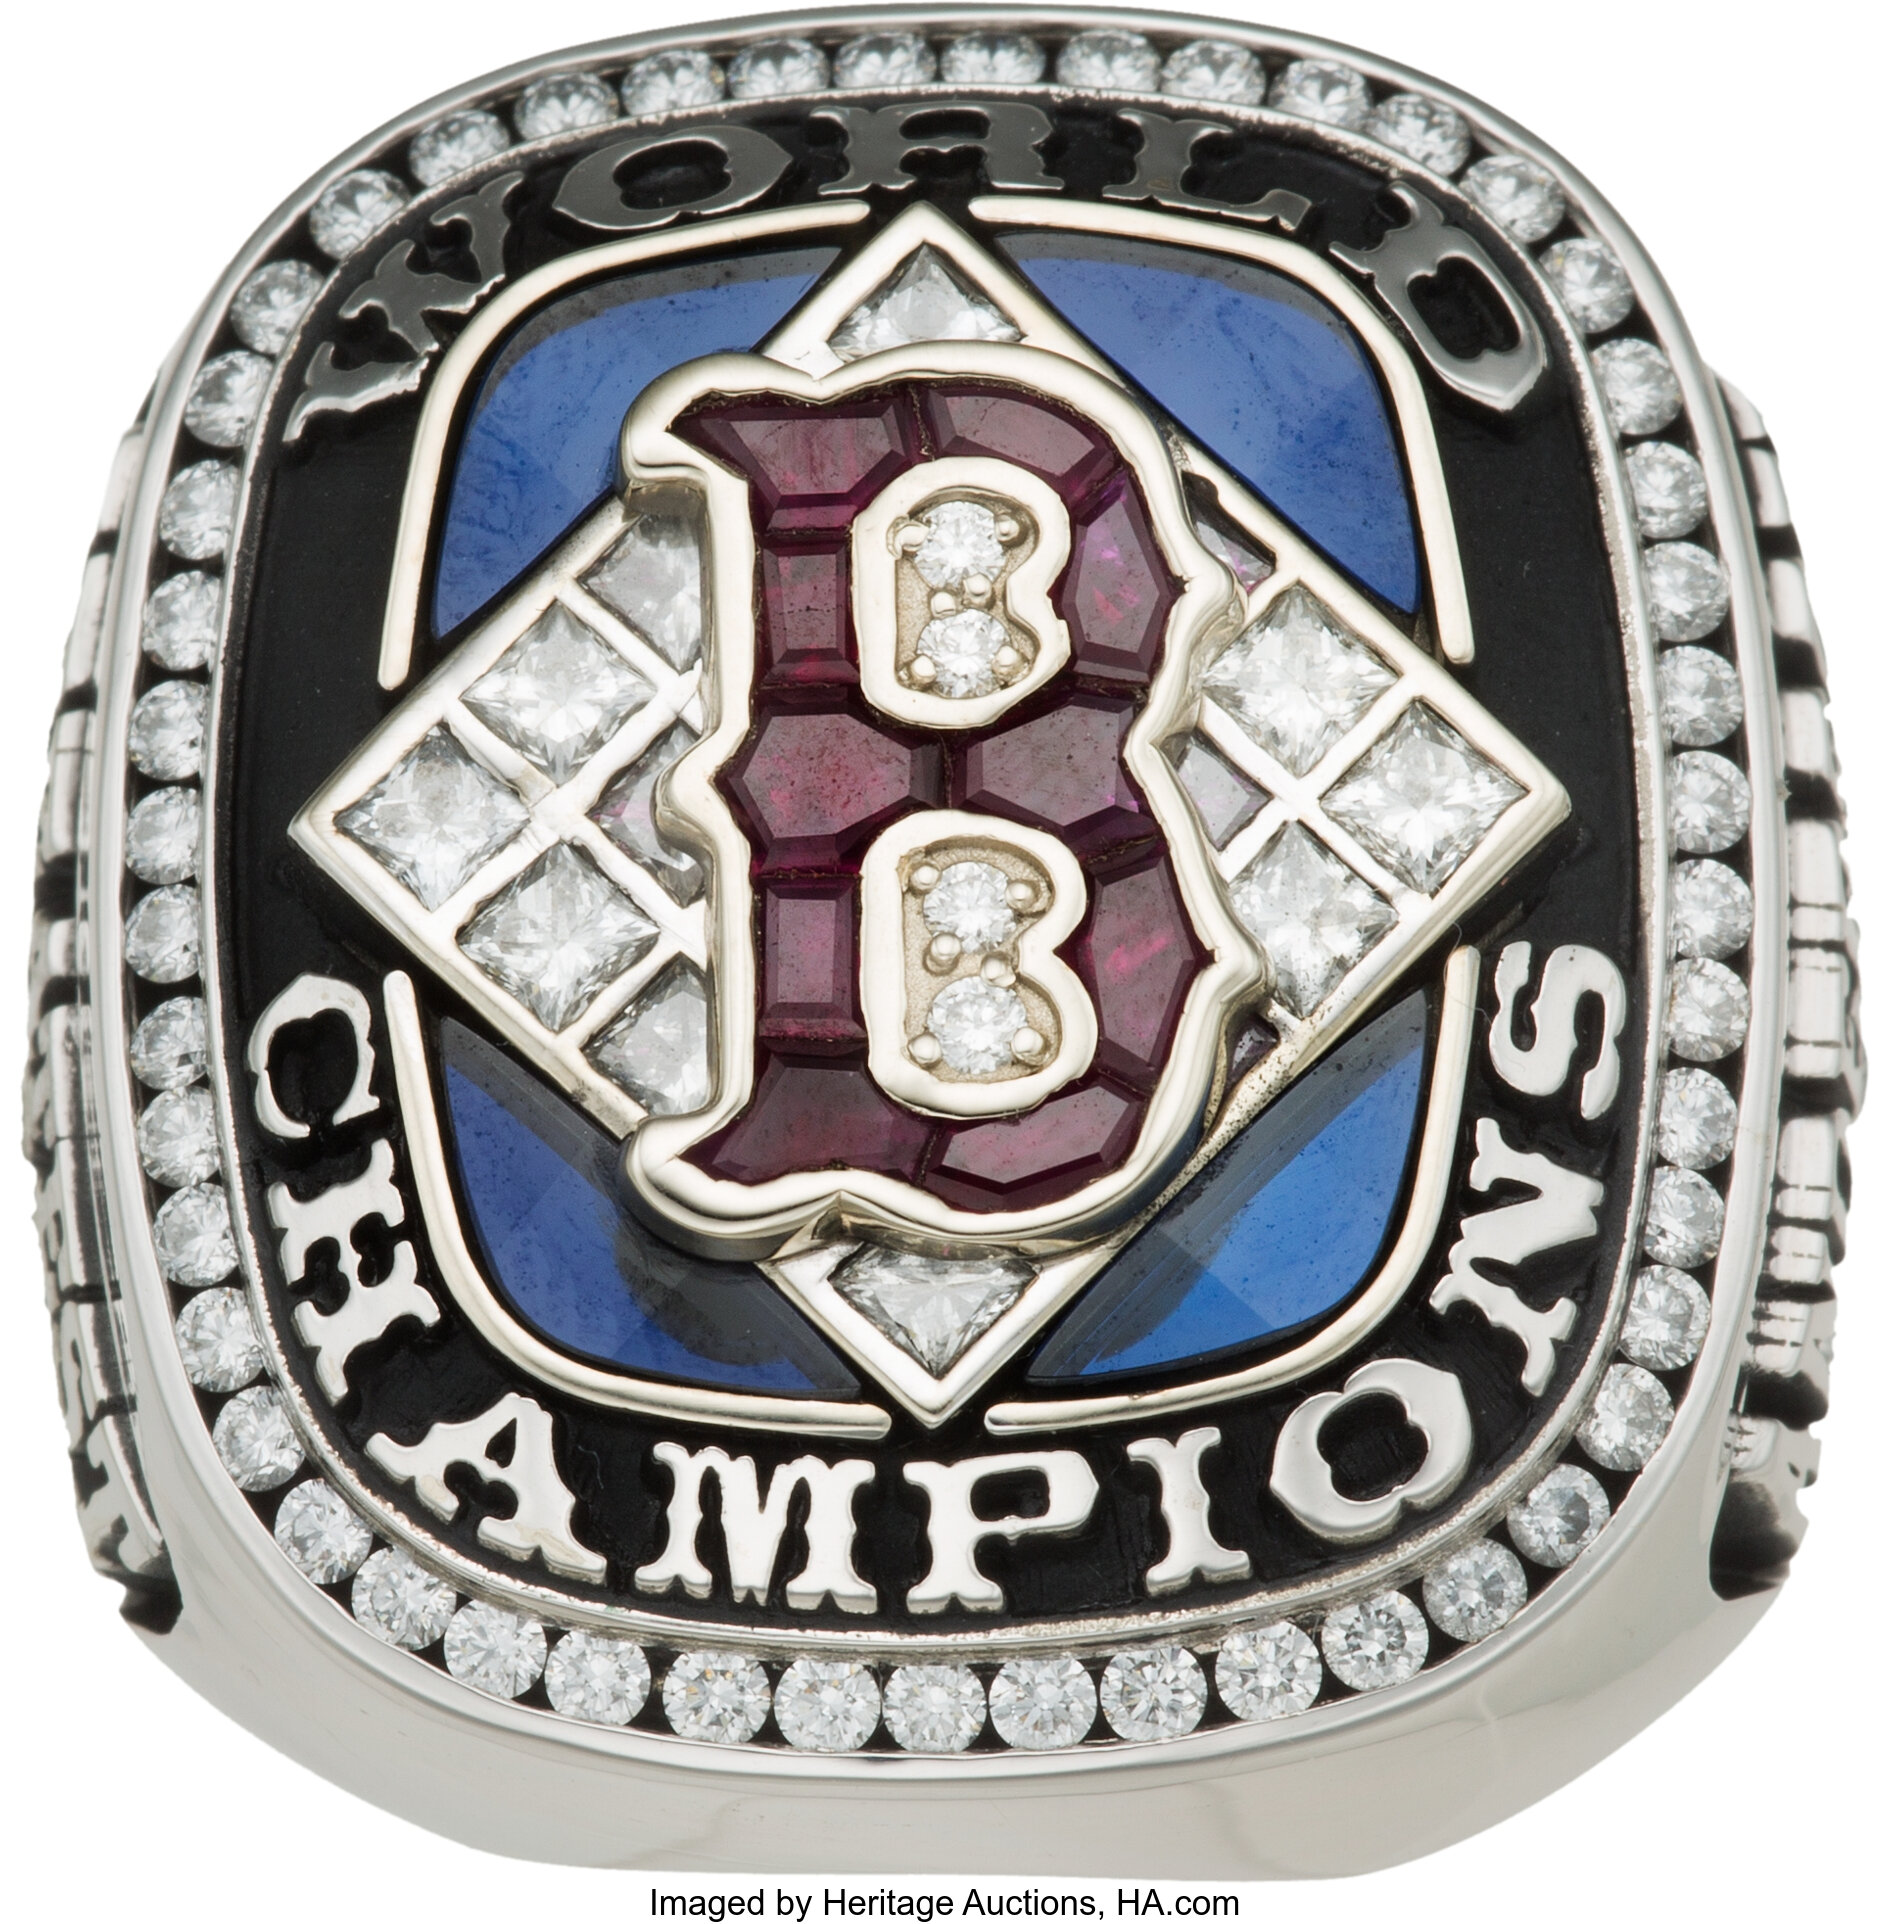 Boston Red Sox 2004, 2007, 2013 & 2018 World Series MLB Championship Ring Set Replica - Yes - 13